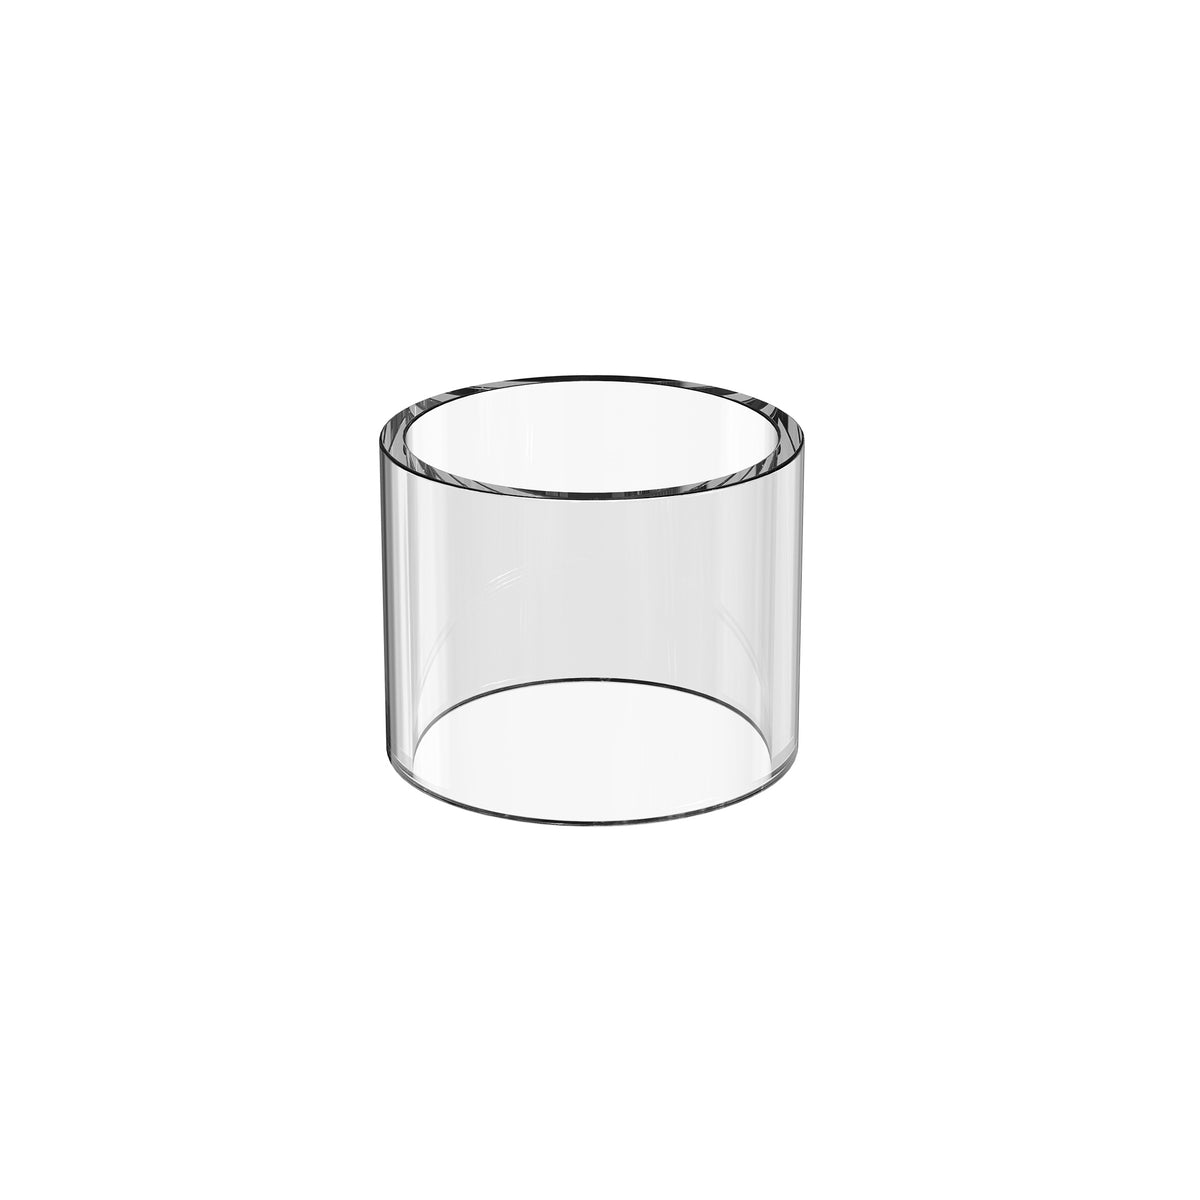 Aspire Nautilus 3²² Replacement Glass